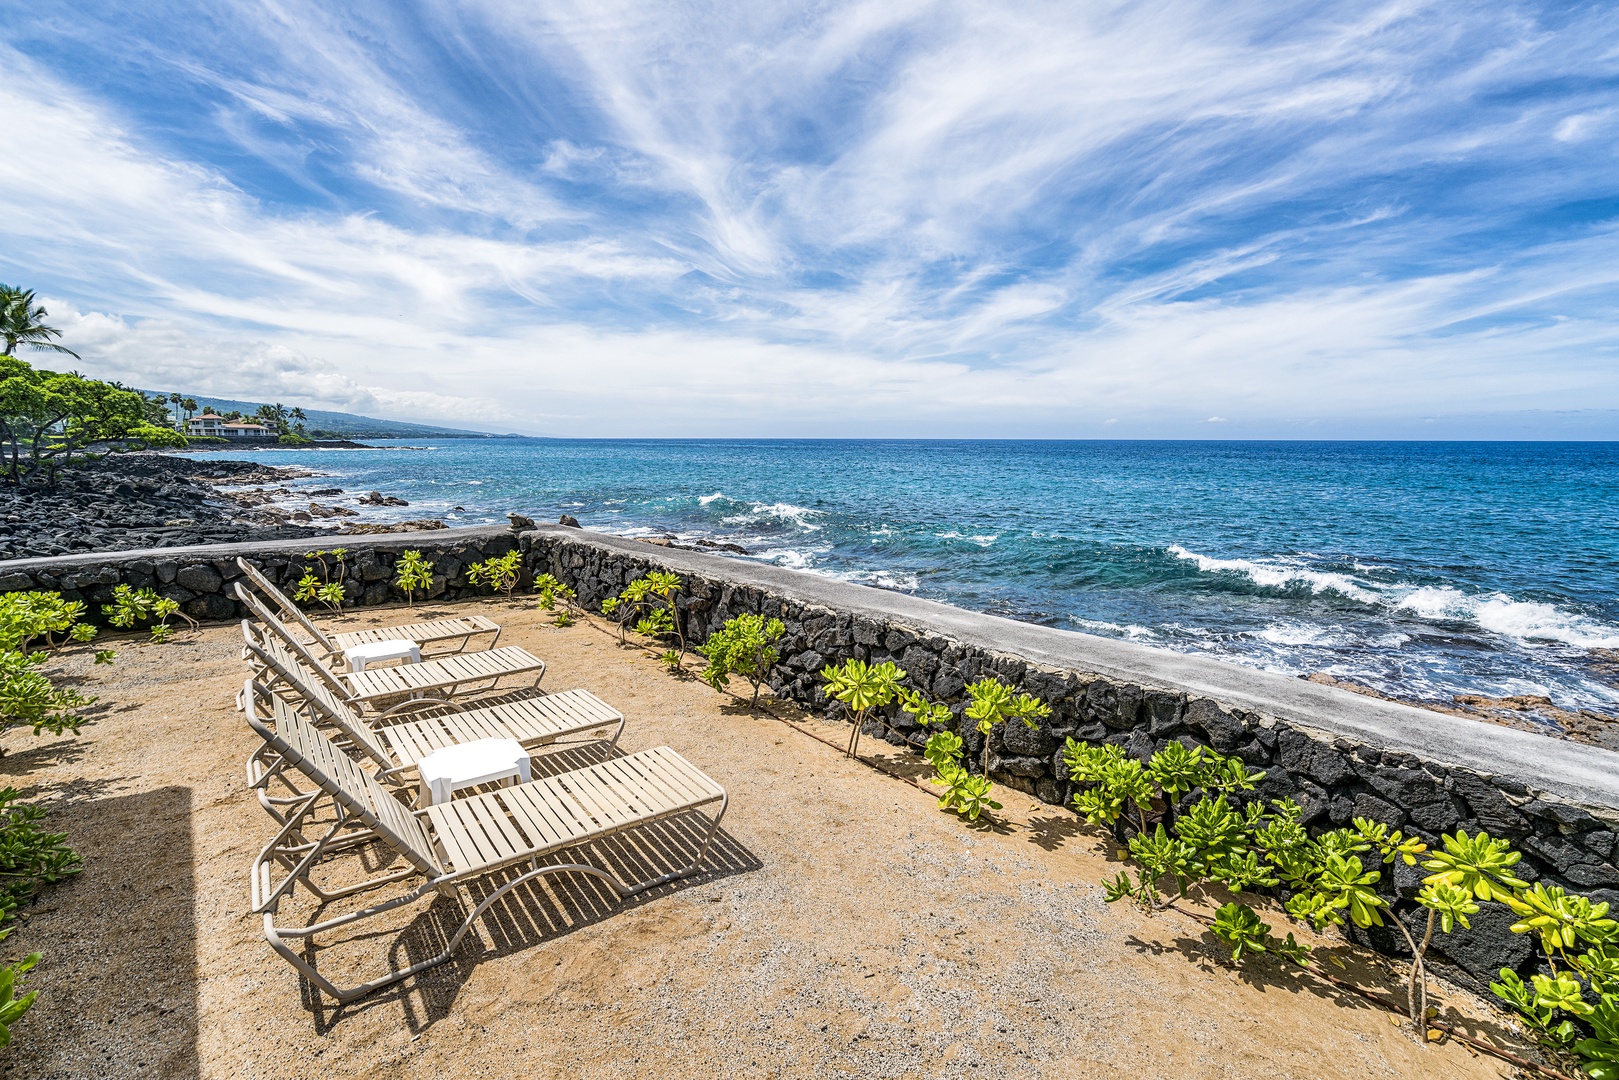 Kailua Kona Vacation Rentals, Casa De Emdeko 222 - Nothing says Paradise better than this!